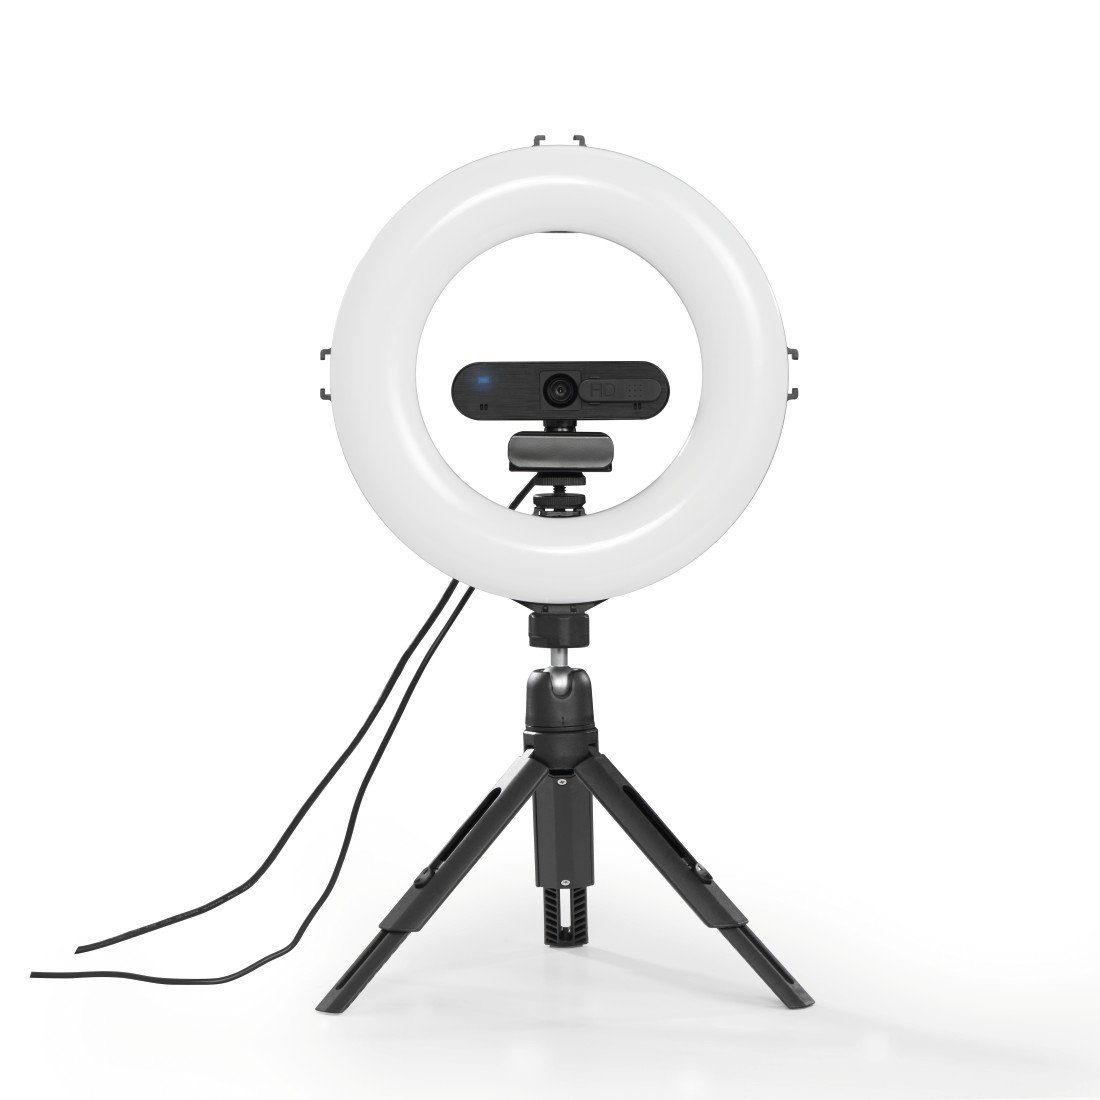 Hama Ringlicht LED Ringleuchte Videokonferenz mit Handy, Mikrofon, Webcam, für Stativ